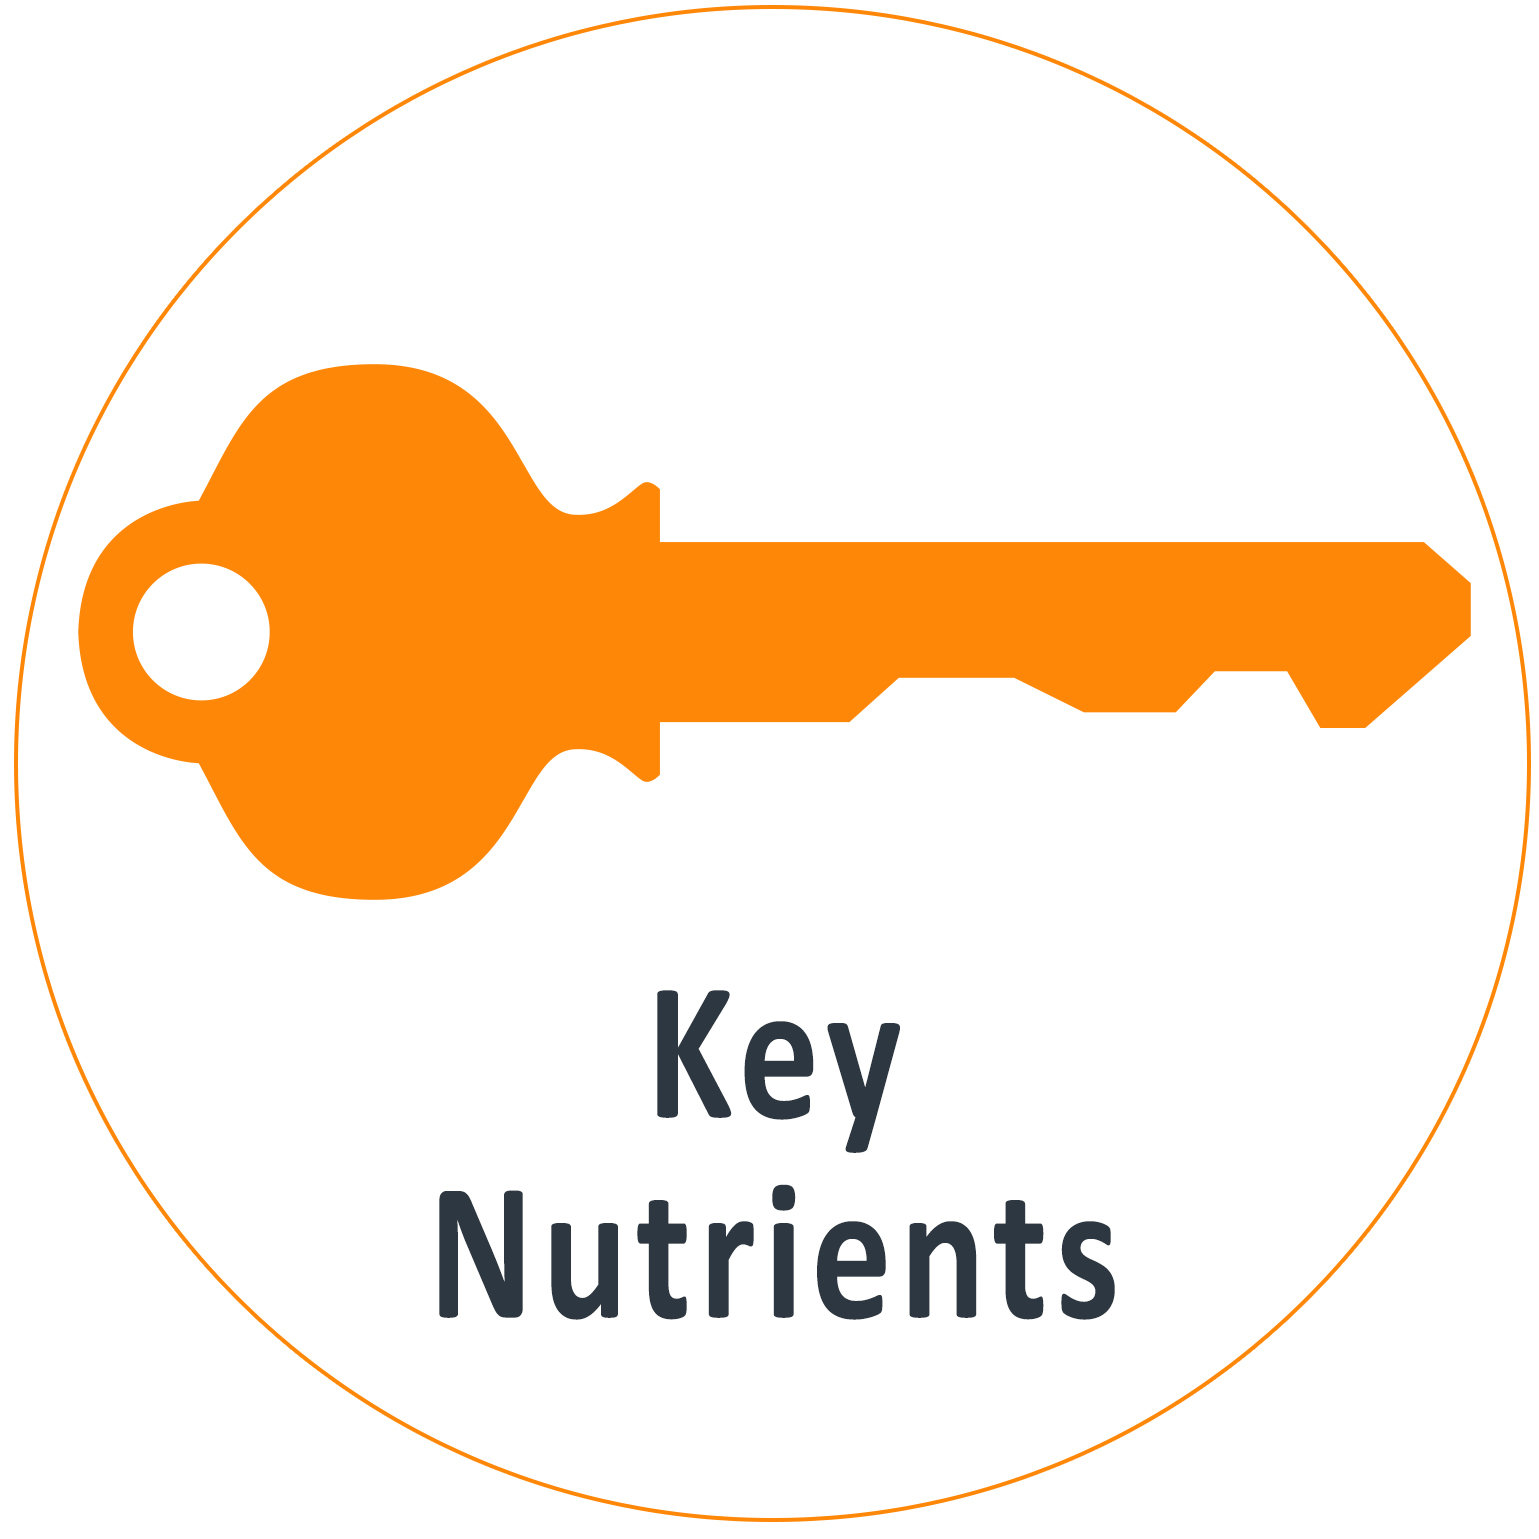 Key nutrients